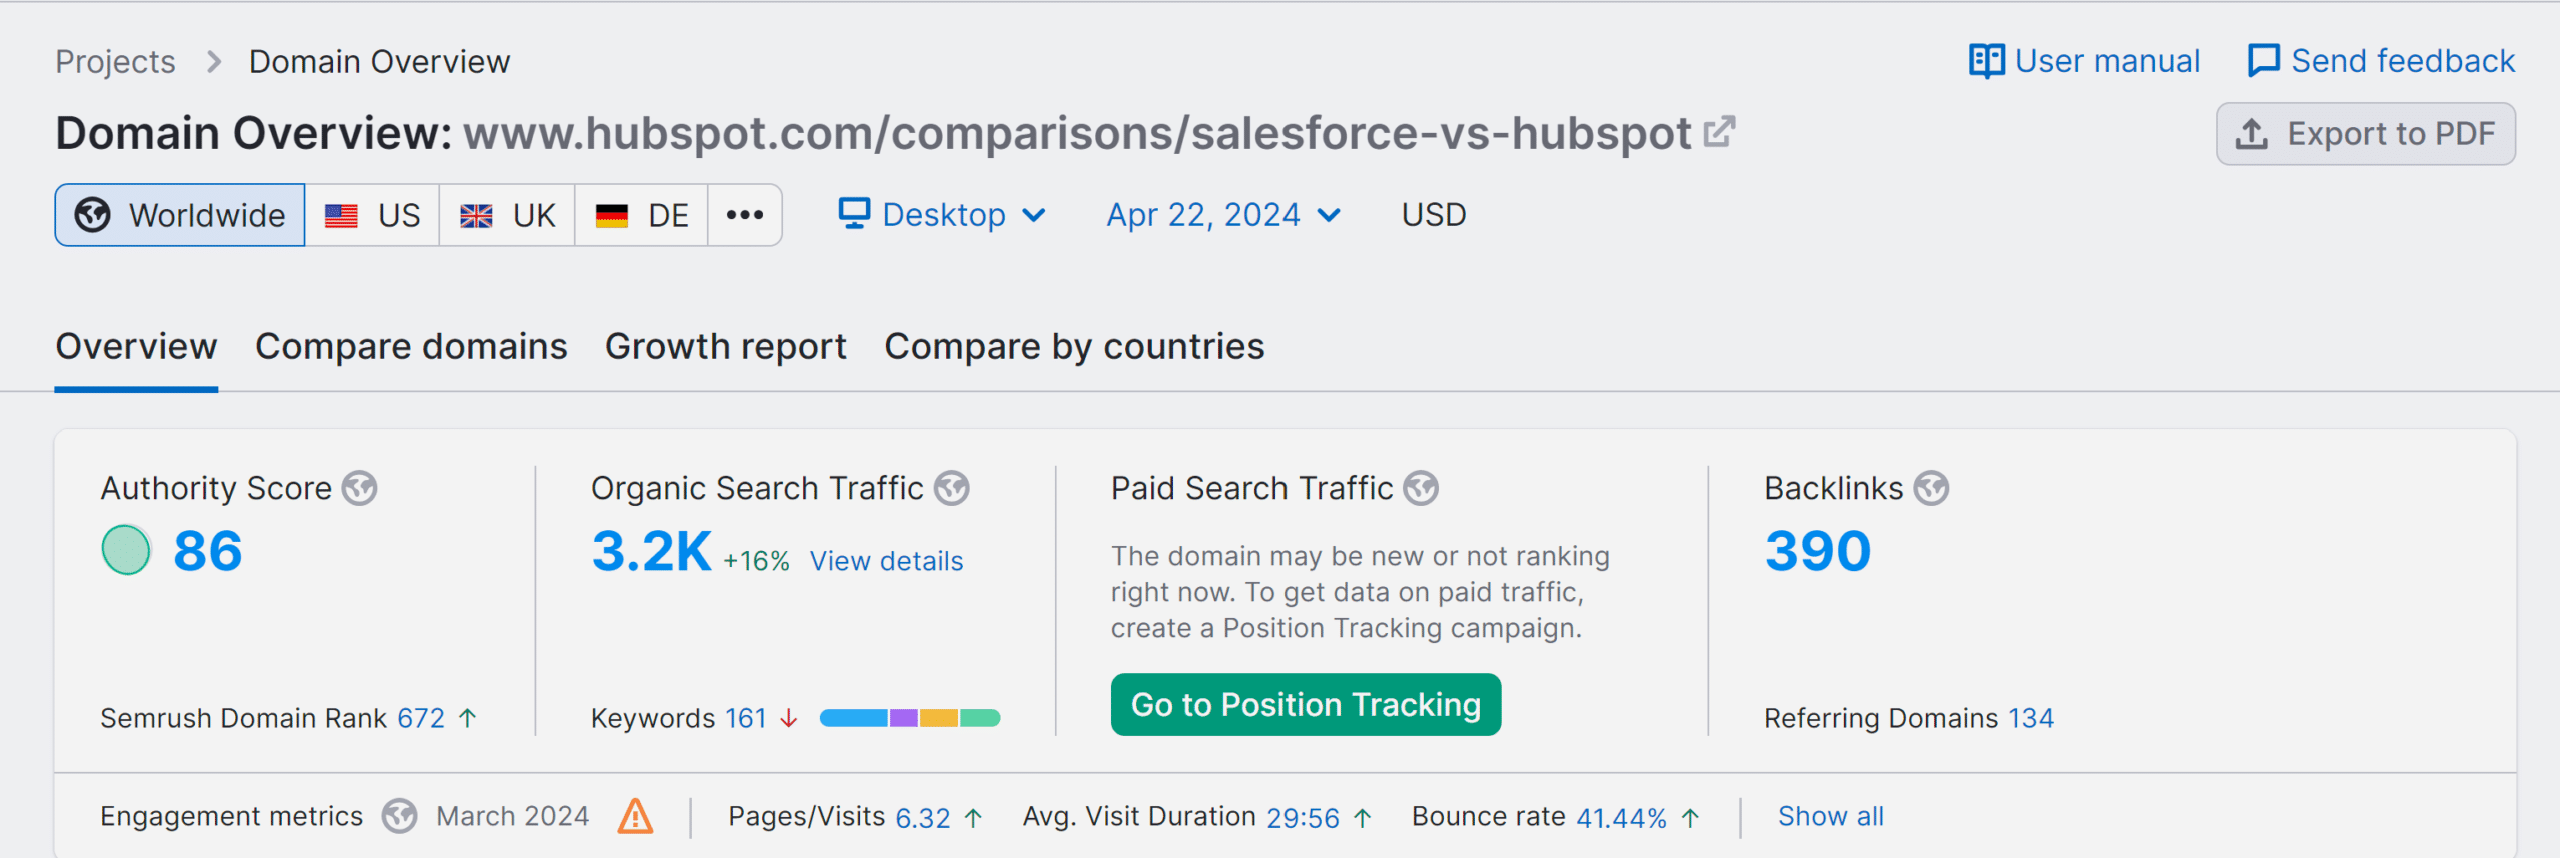 hubspot vs salesforce